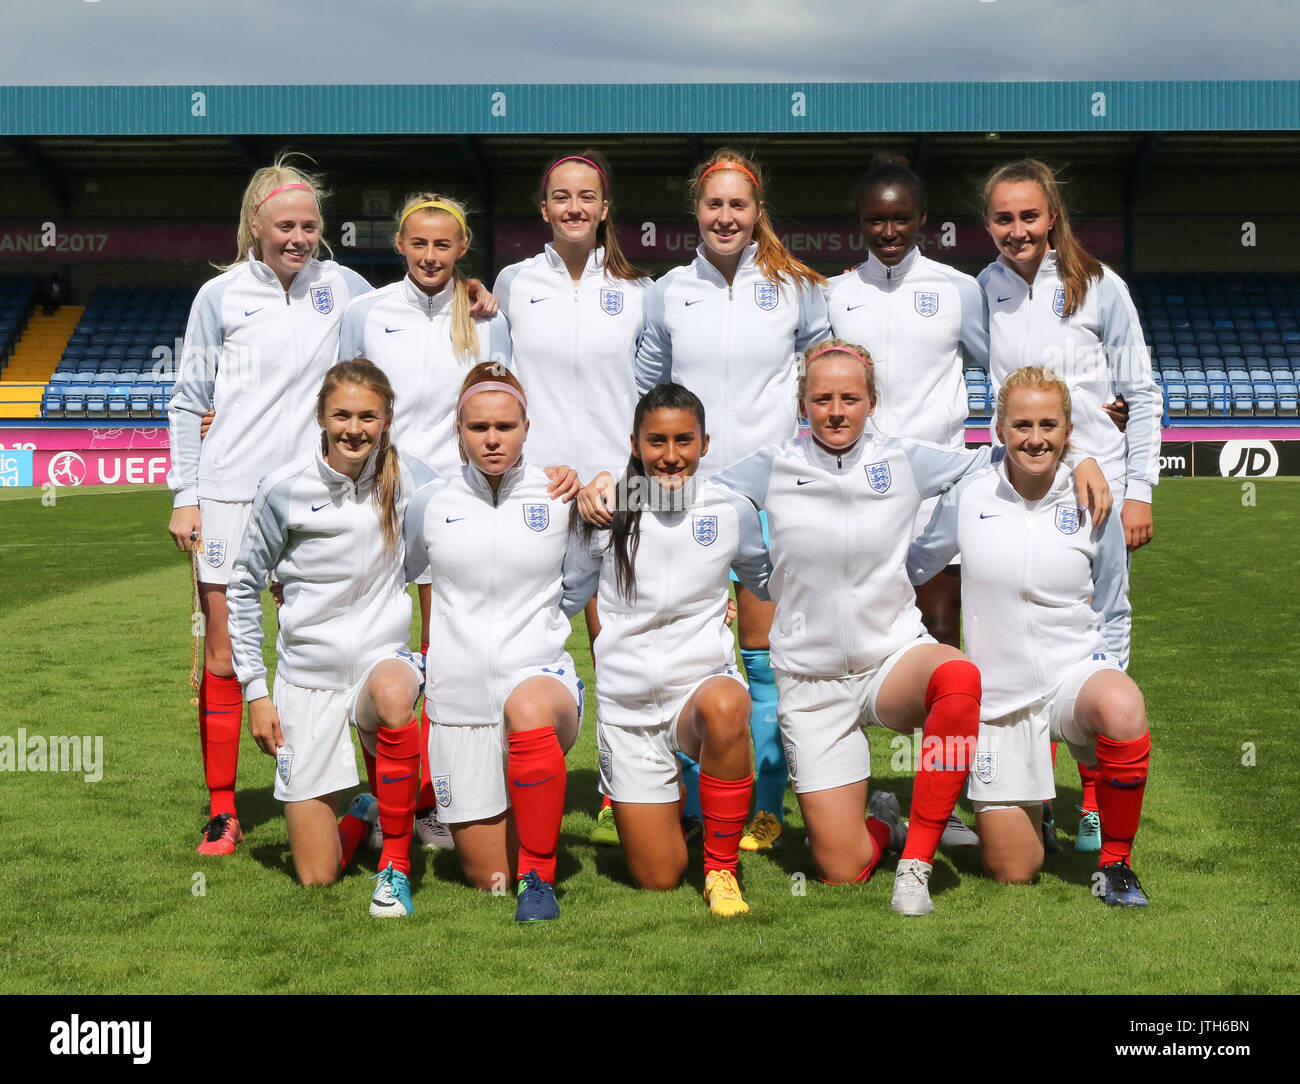 Mourneview Park, Lurgan, Northern Ireland. 08 August 2017. UEFA Women's Under-19 Championship Group B – Italy v England. The England team at kick-off. Credit: David Hunter/Alamy Live News. Stock Photo